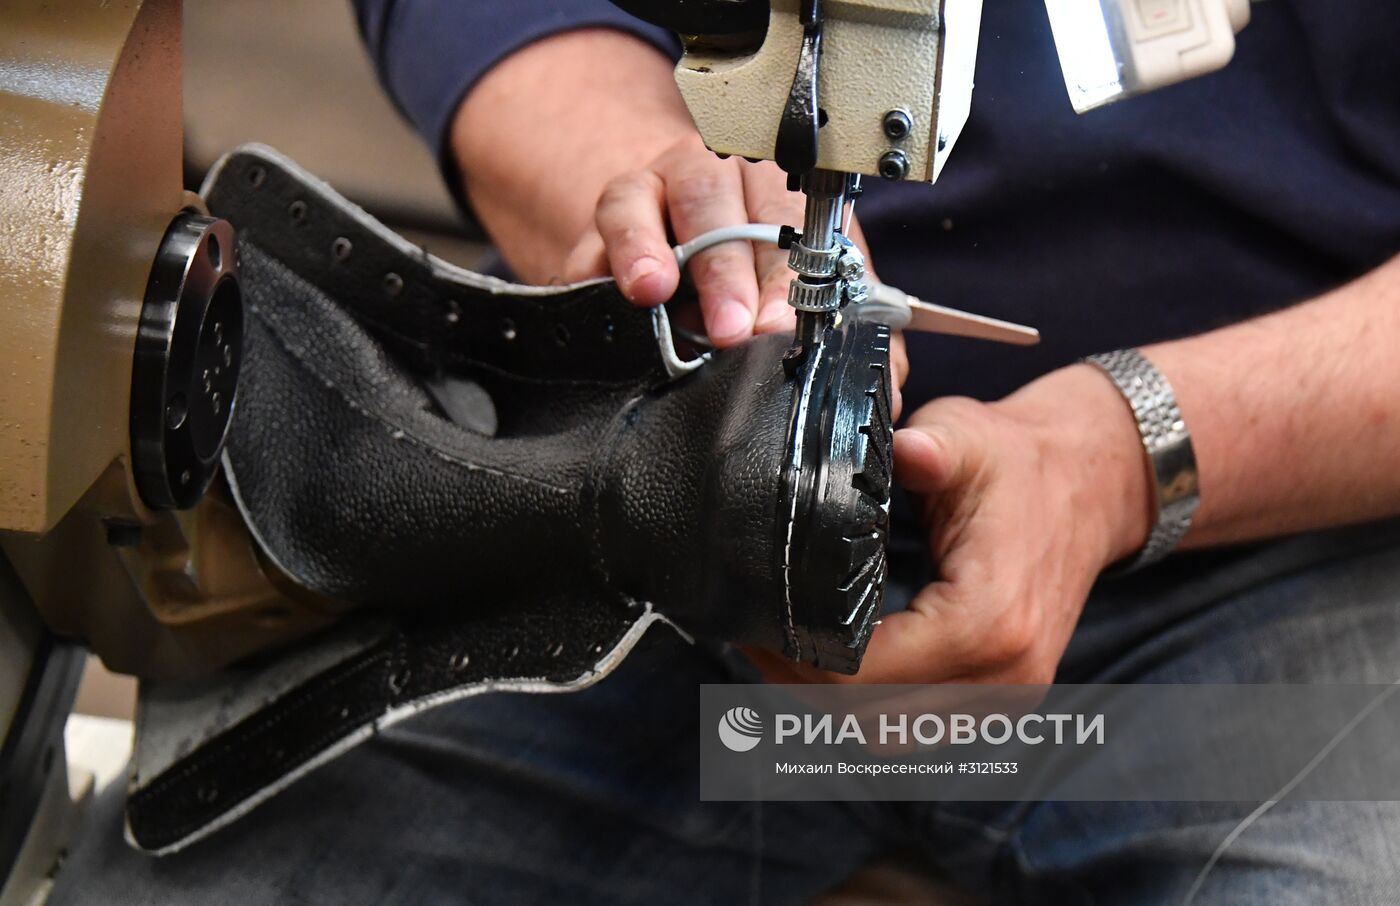 Обувная фабрика в сирийской провинции Хама